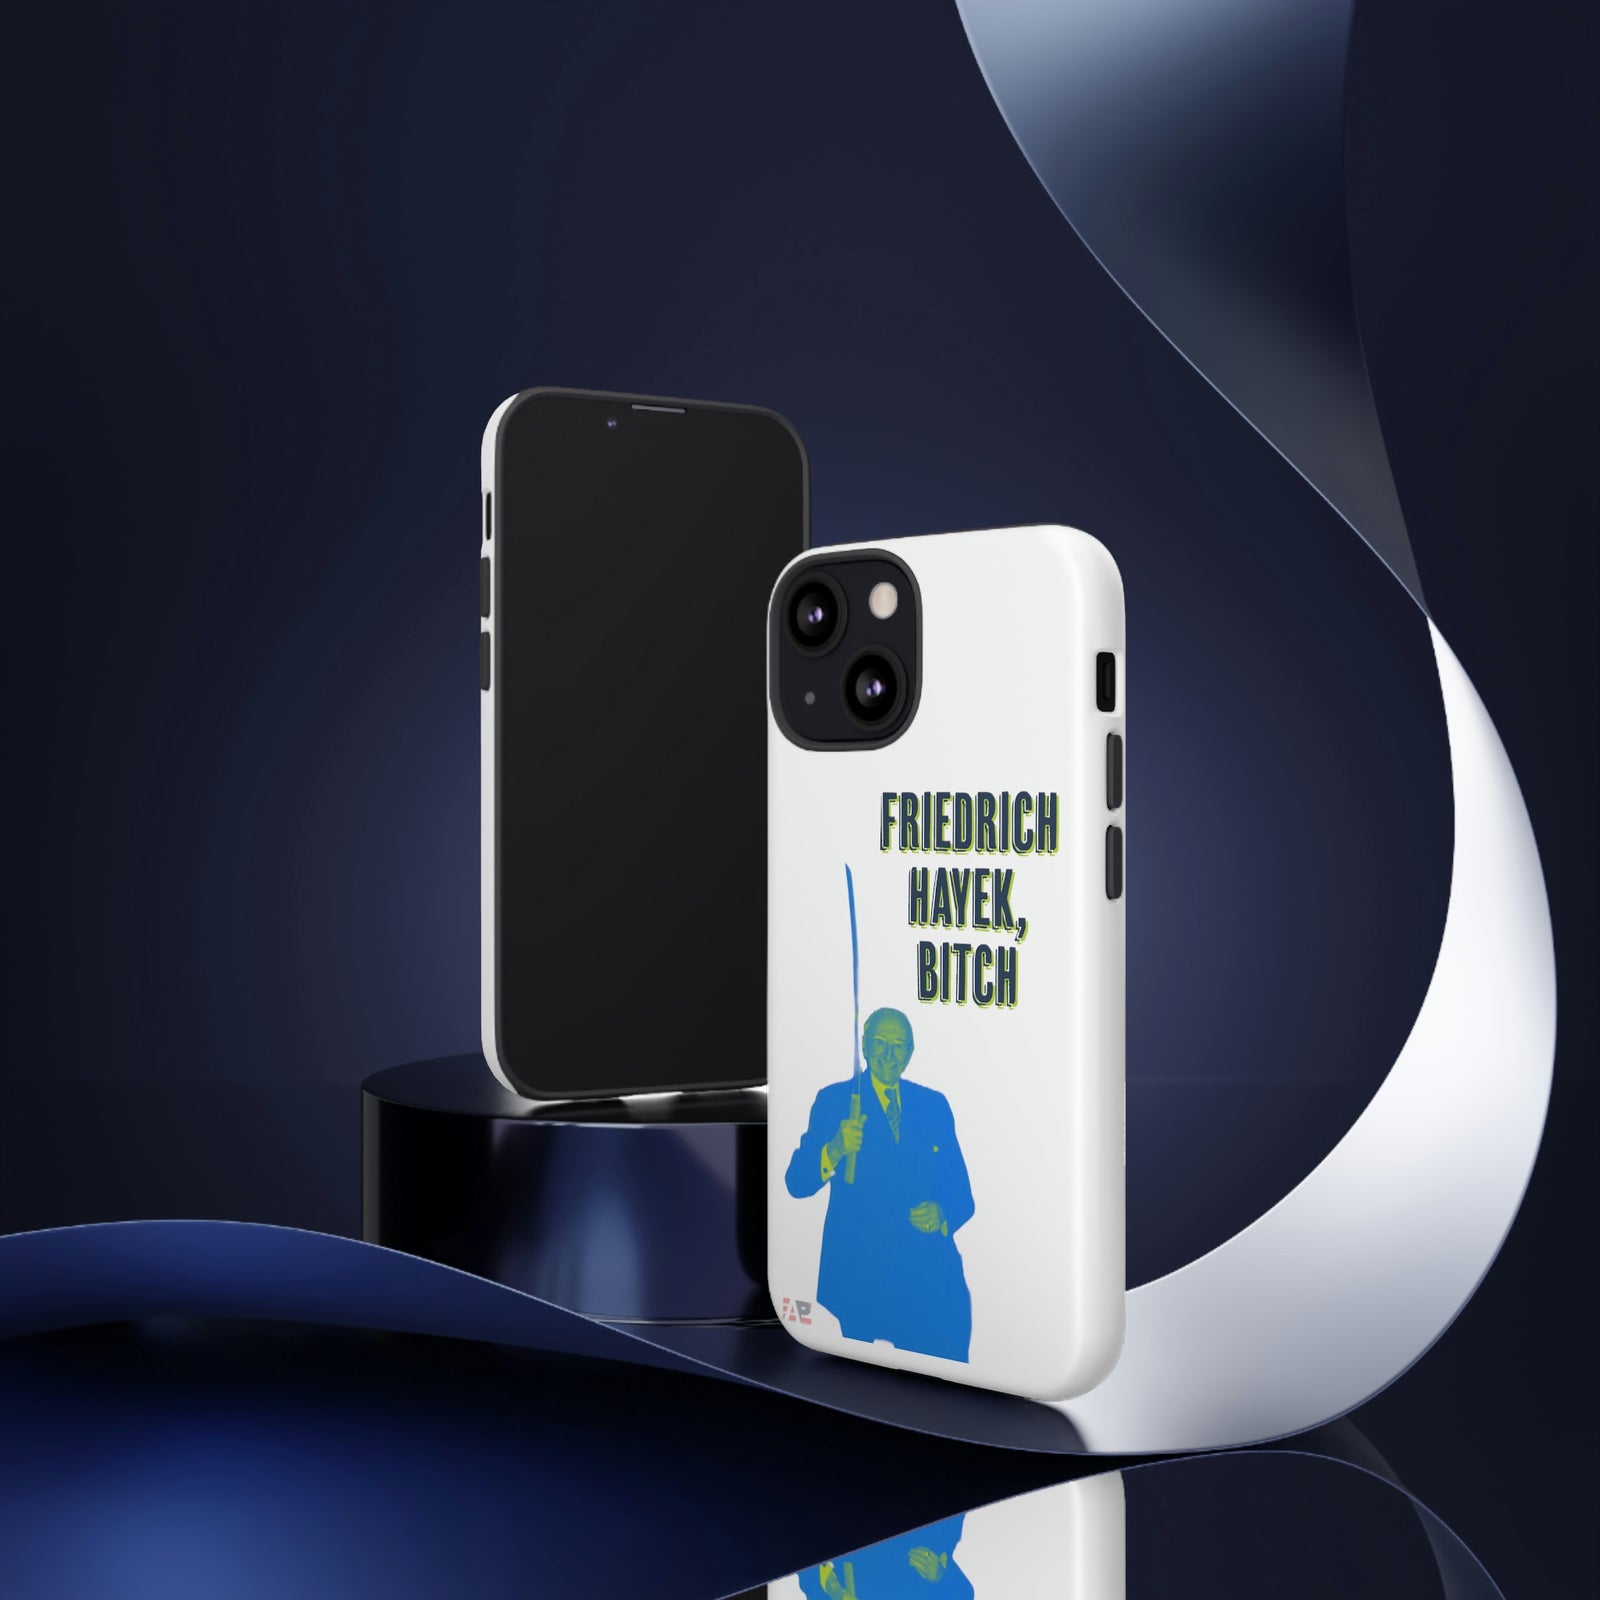 Friedrich Hayek Sword Bitch Phone Cases